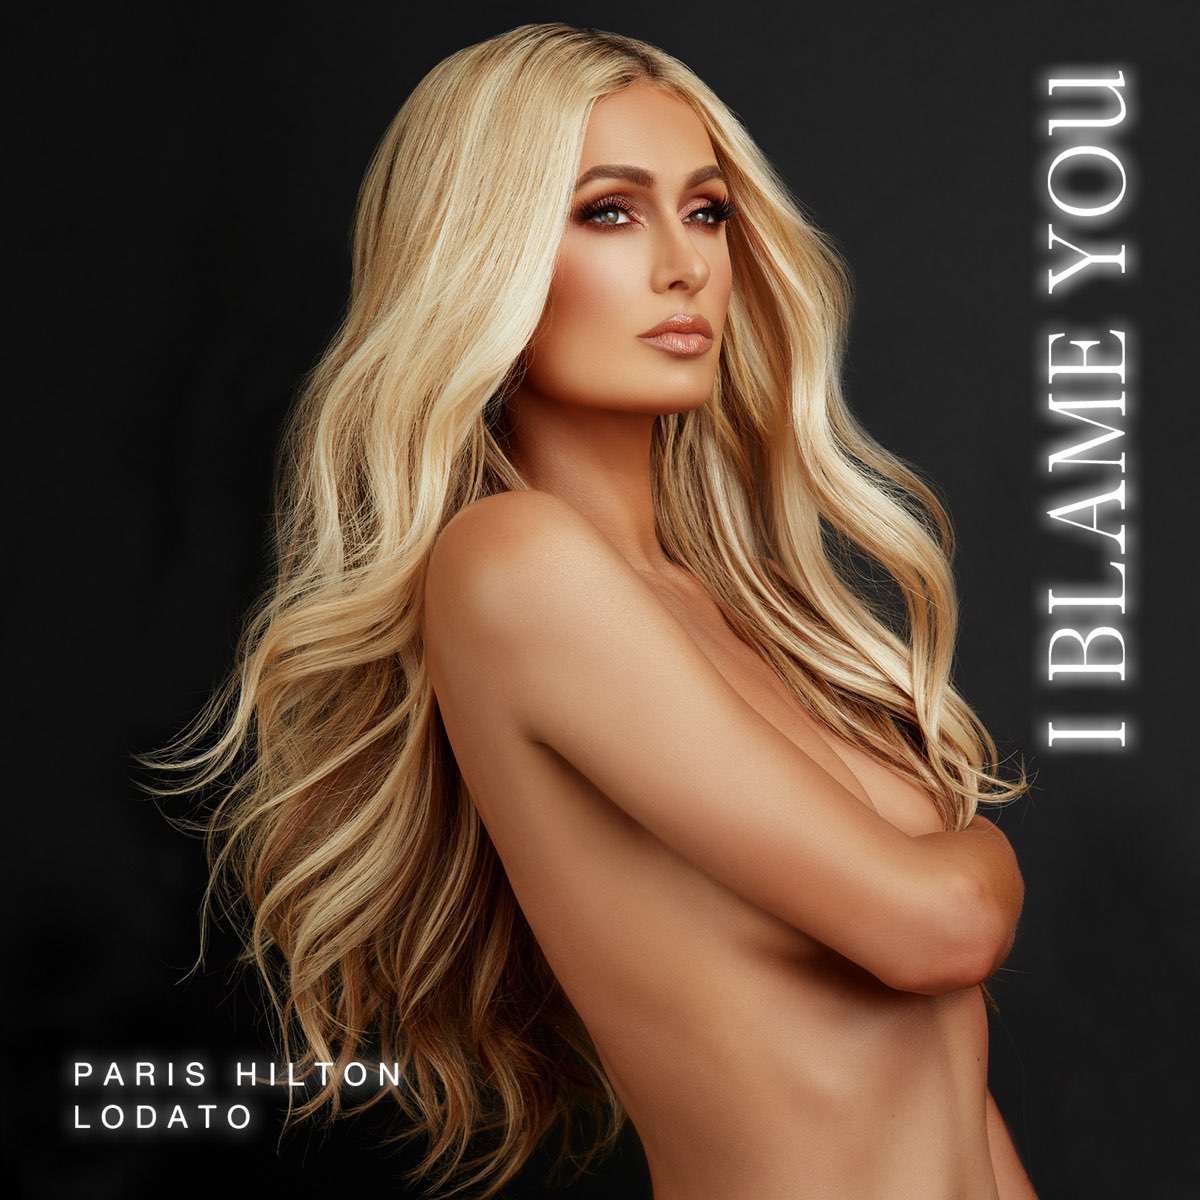 Paris Hilton I Blame You Ft Lodato